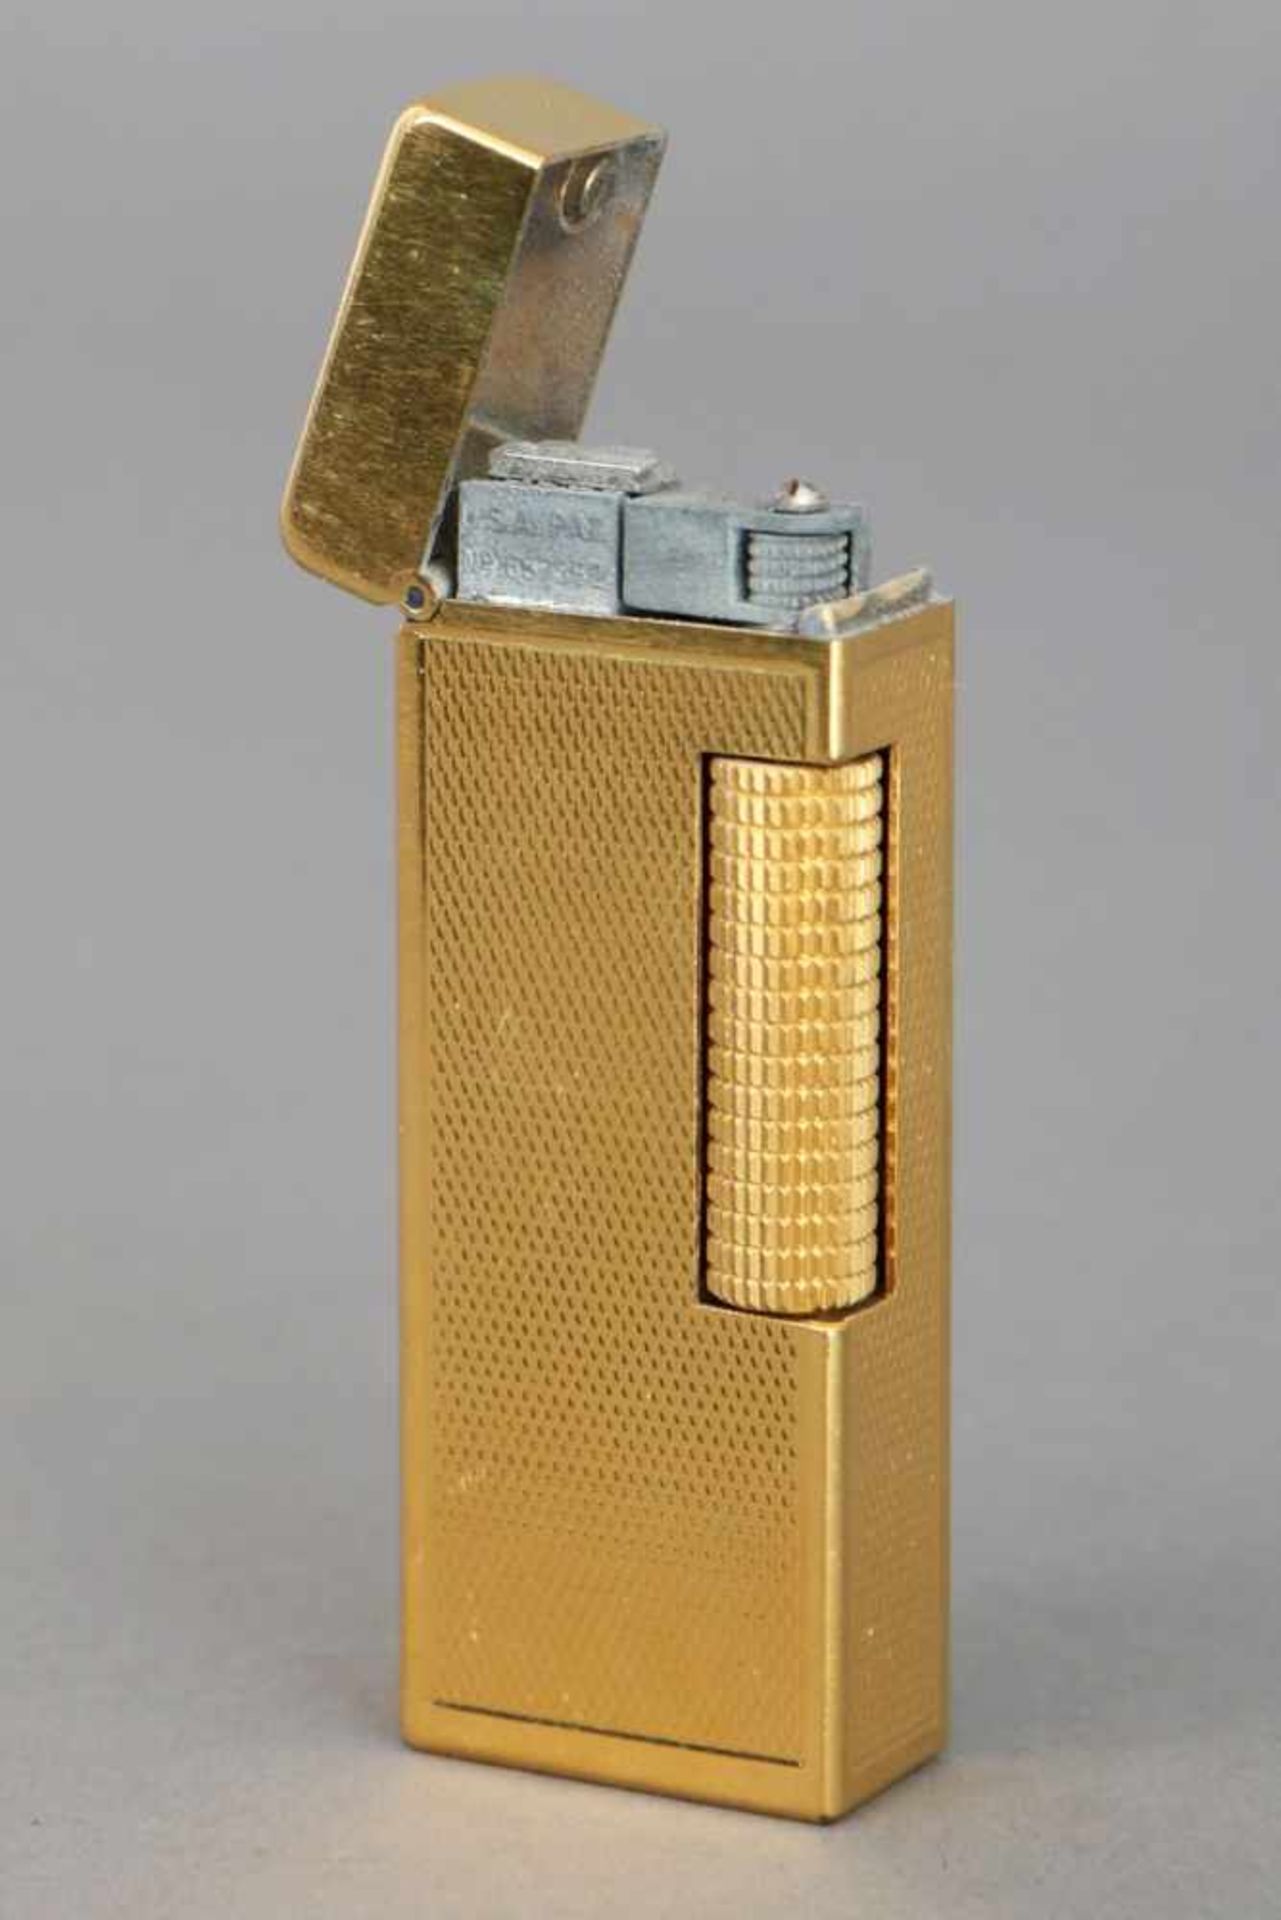 Dunhill Feuerzeugvergoldetes Metall, fein guillochiertes Rautendekor, im (ergänzten) Dunhill-Etui